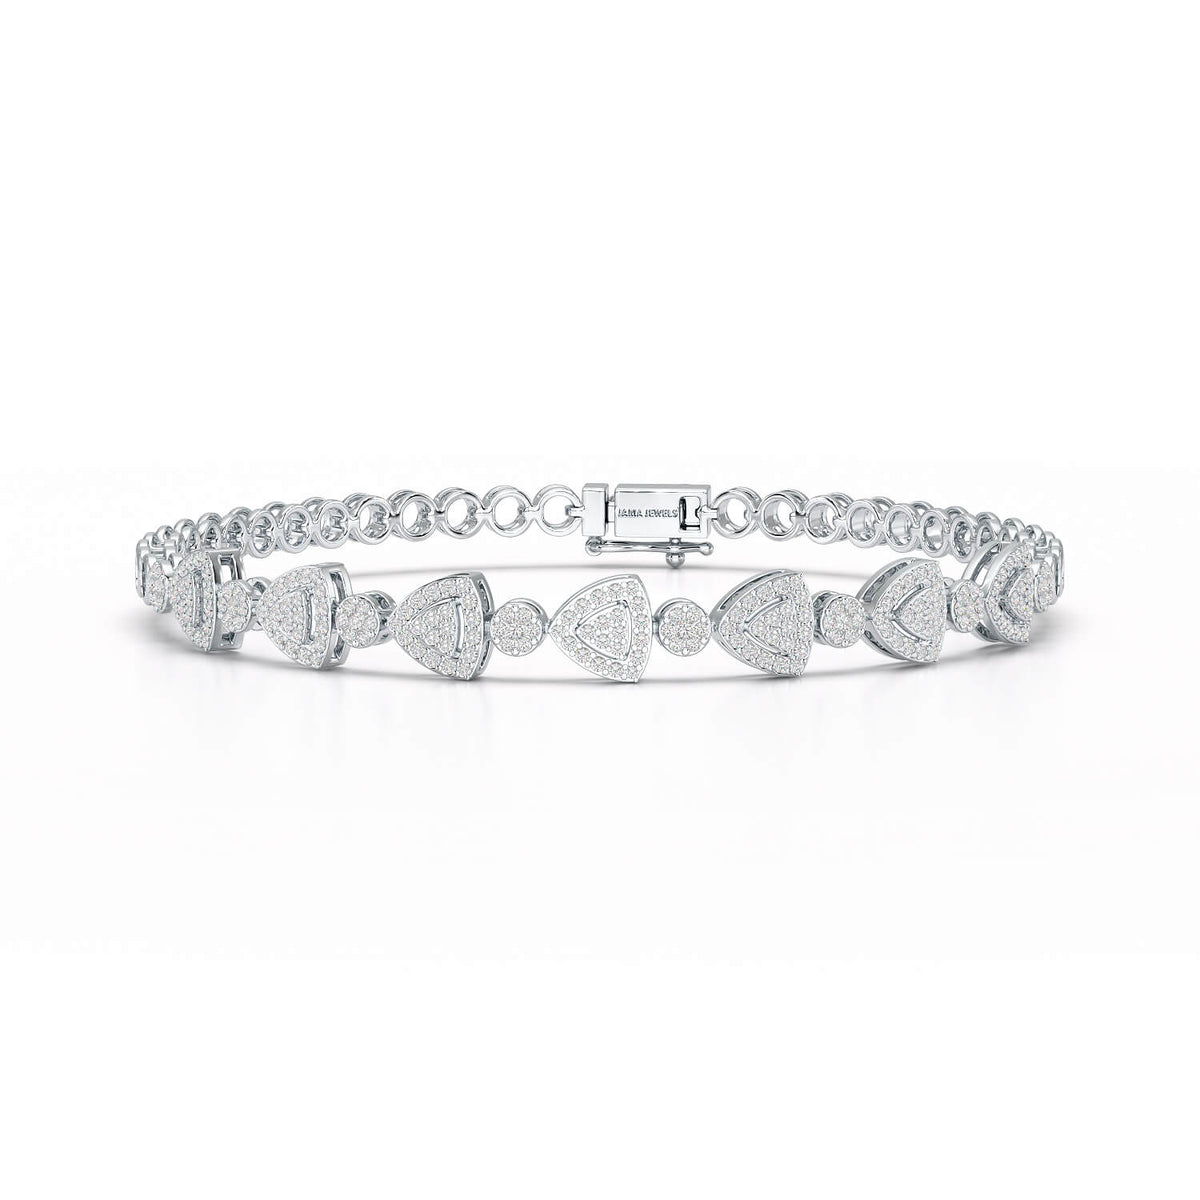 1.09 CT Diamond Lab Created Classic Women's Bracelet